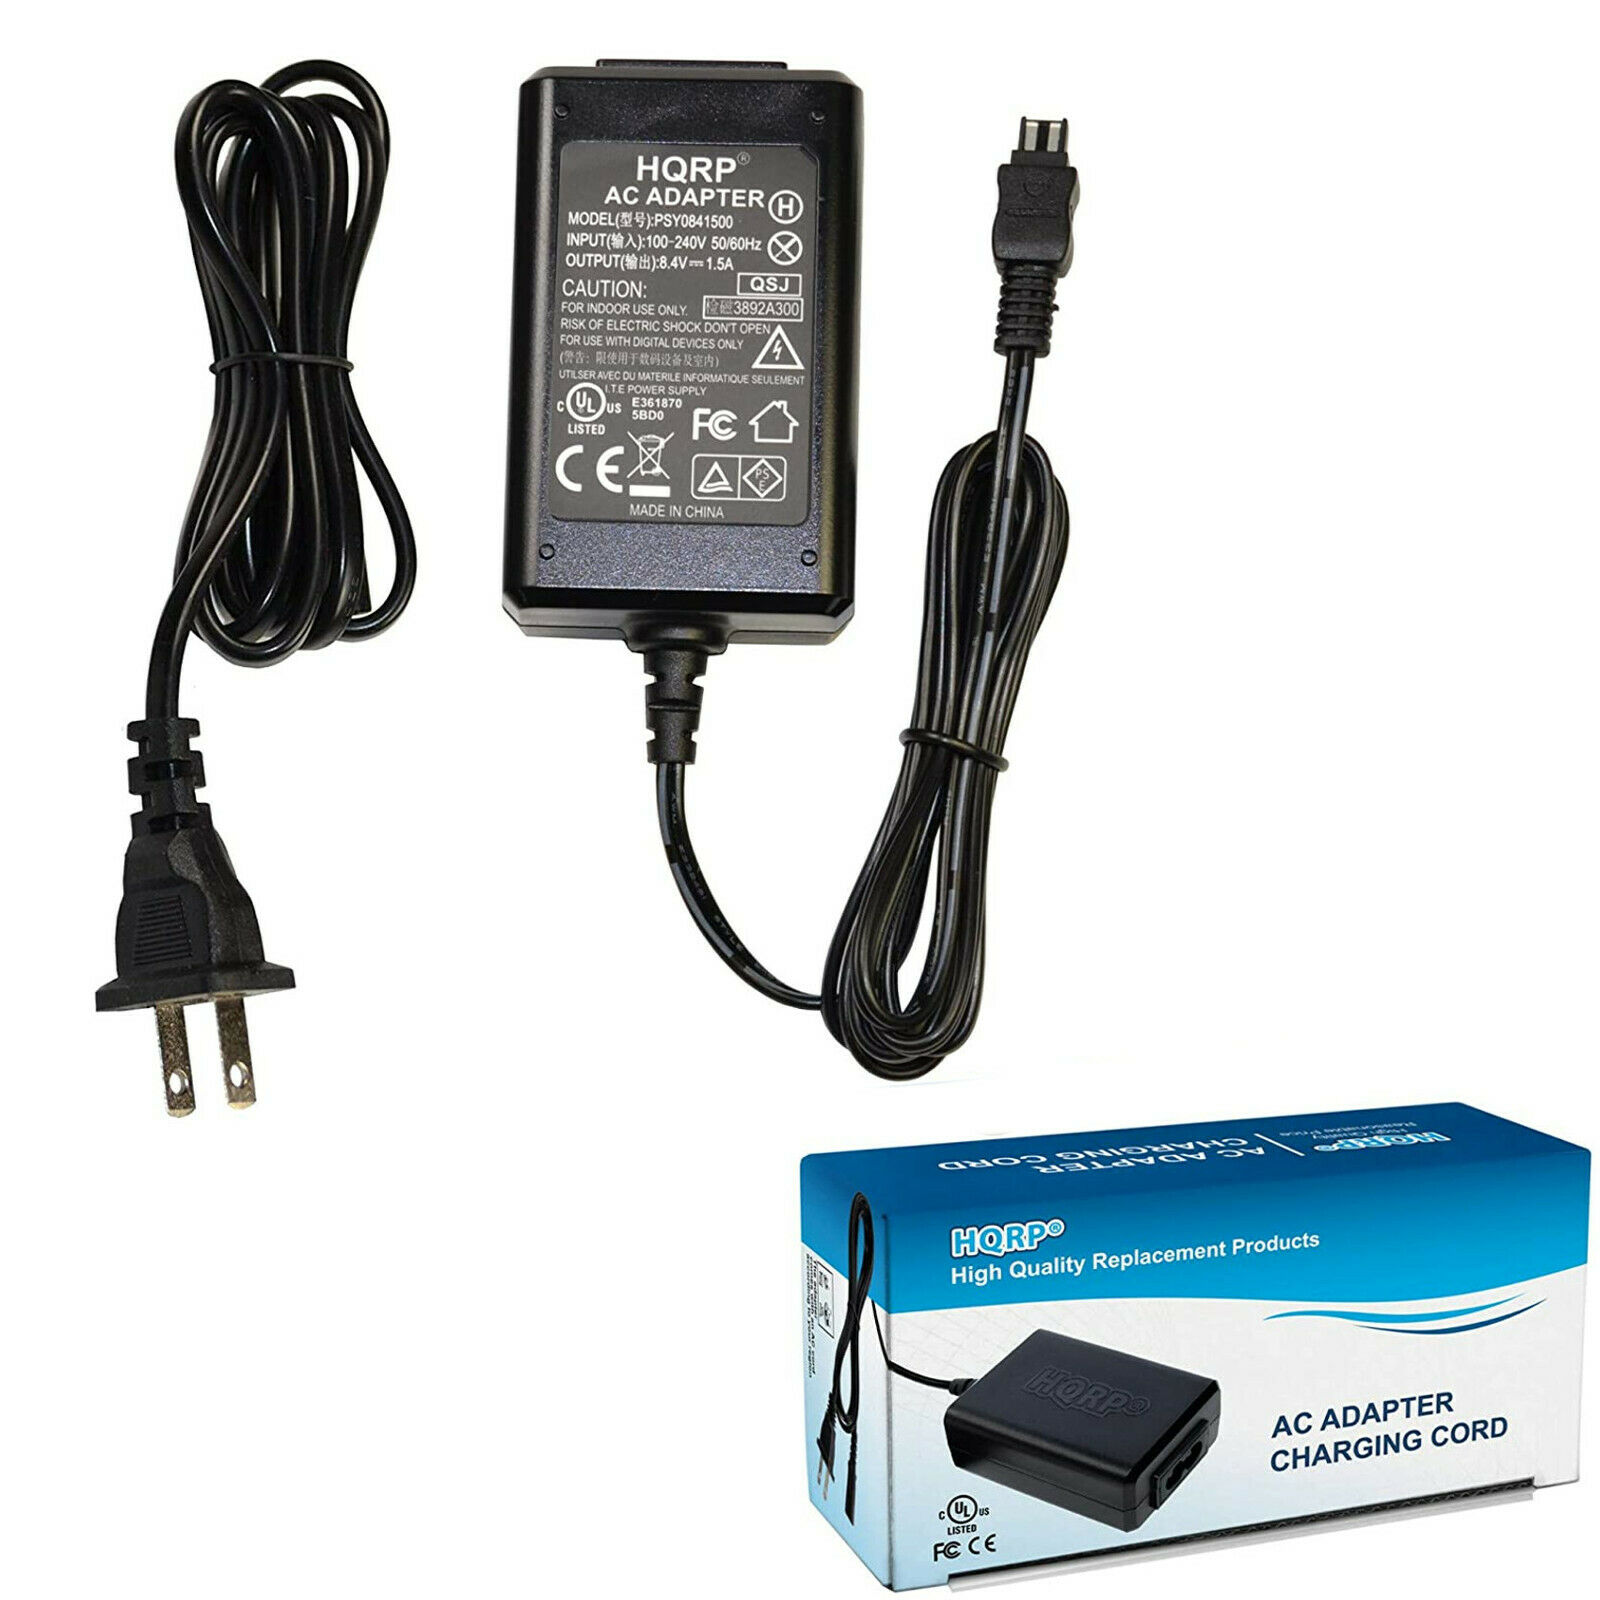 AC Adapter Charger for Sony HandyCam DCR-SR42A DCR-SR45 DCR-SR47 DCR-SR68 To Fit: Camcorder Compatible Brand: For Son